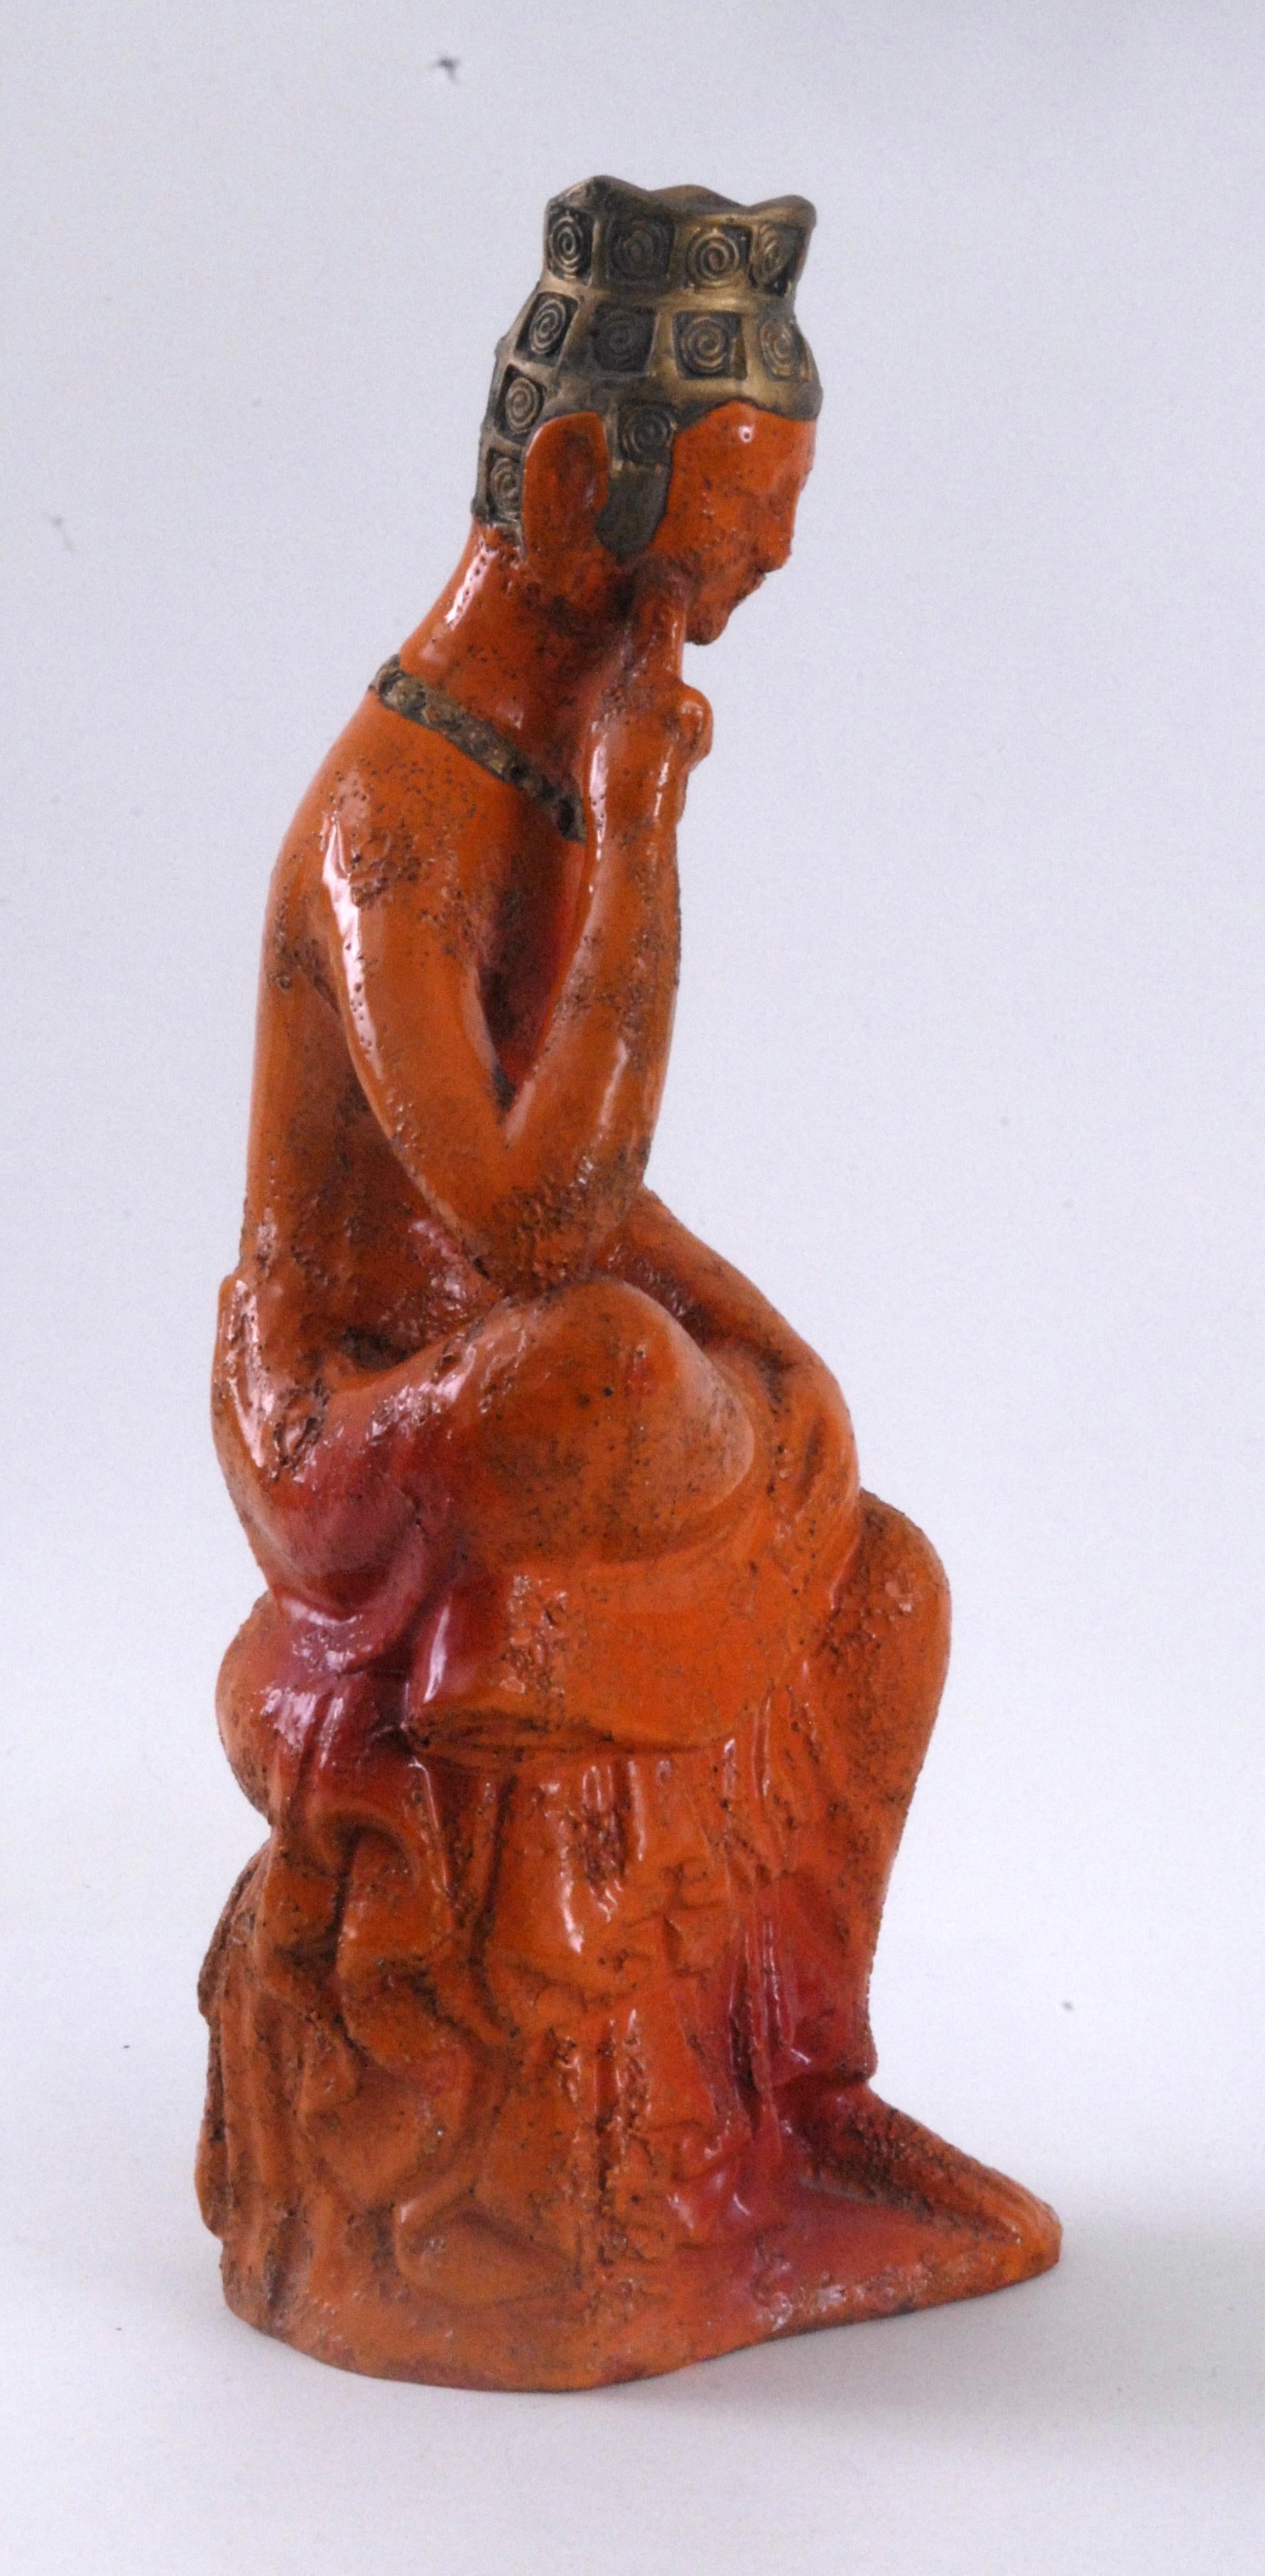 A large seated Buddha by Aldo Londi for Bitossi in 'Cinese' orange glaze.